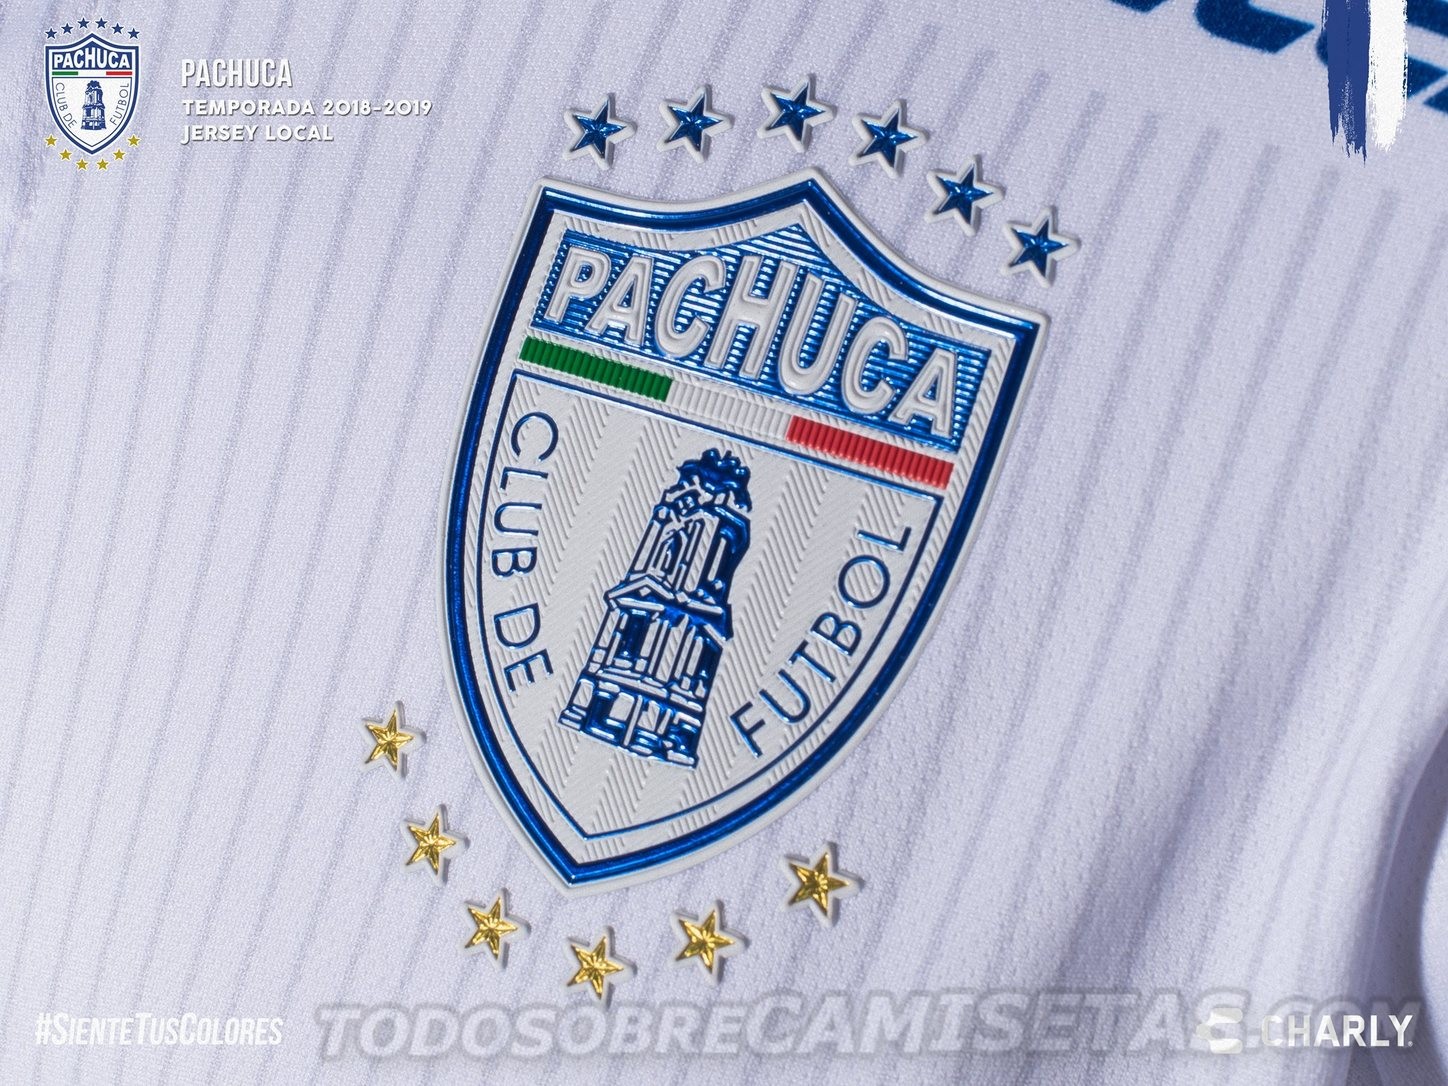 Jerseys Charly Futbol de Pachuca 2018-19